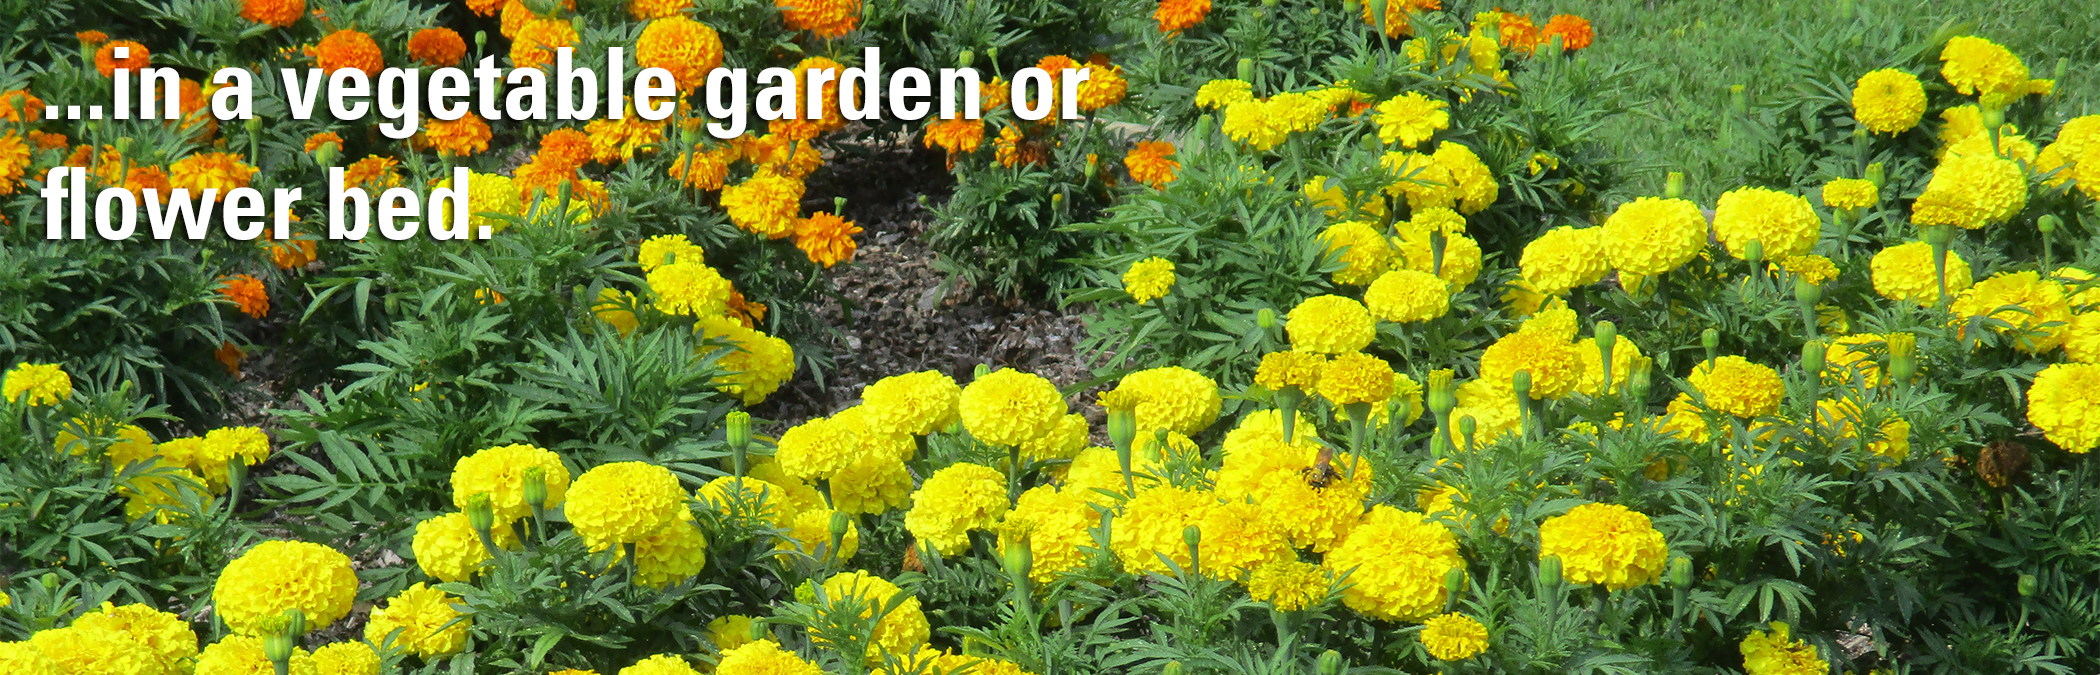 in a vegetable garden or flower bed.